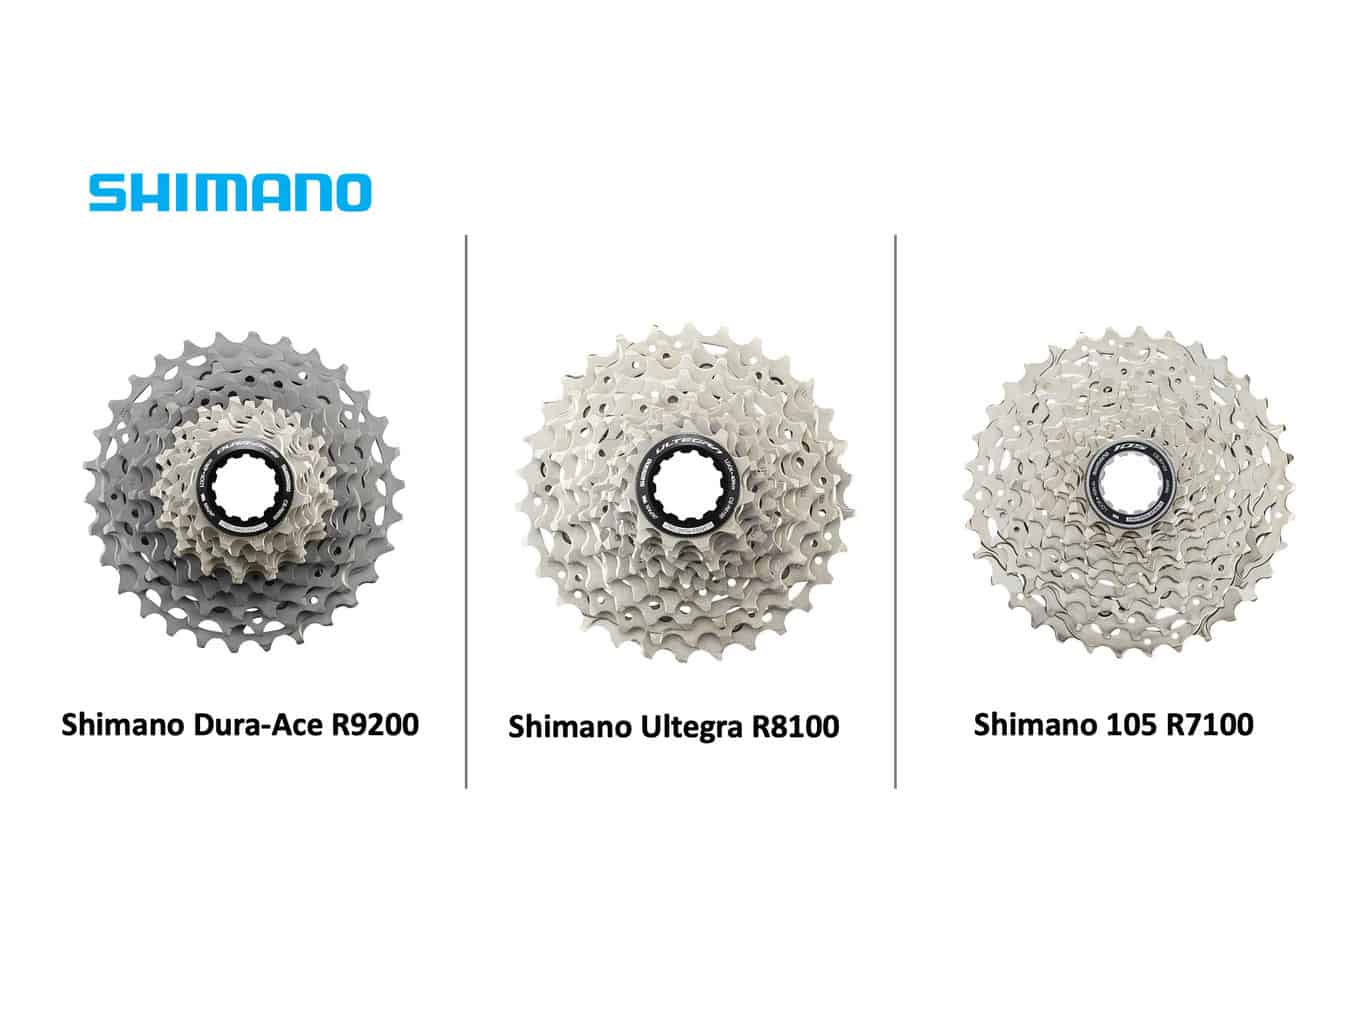 Shimano Dura-Ace vs Ultegra vs 105 12-speed Cassettes Featured